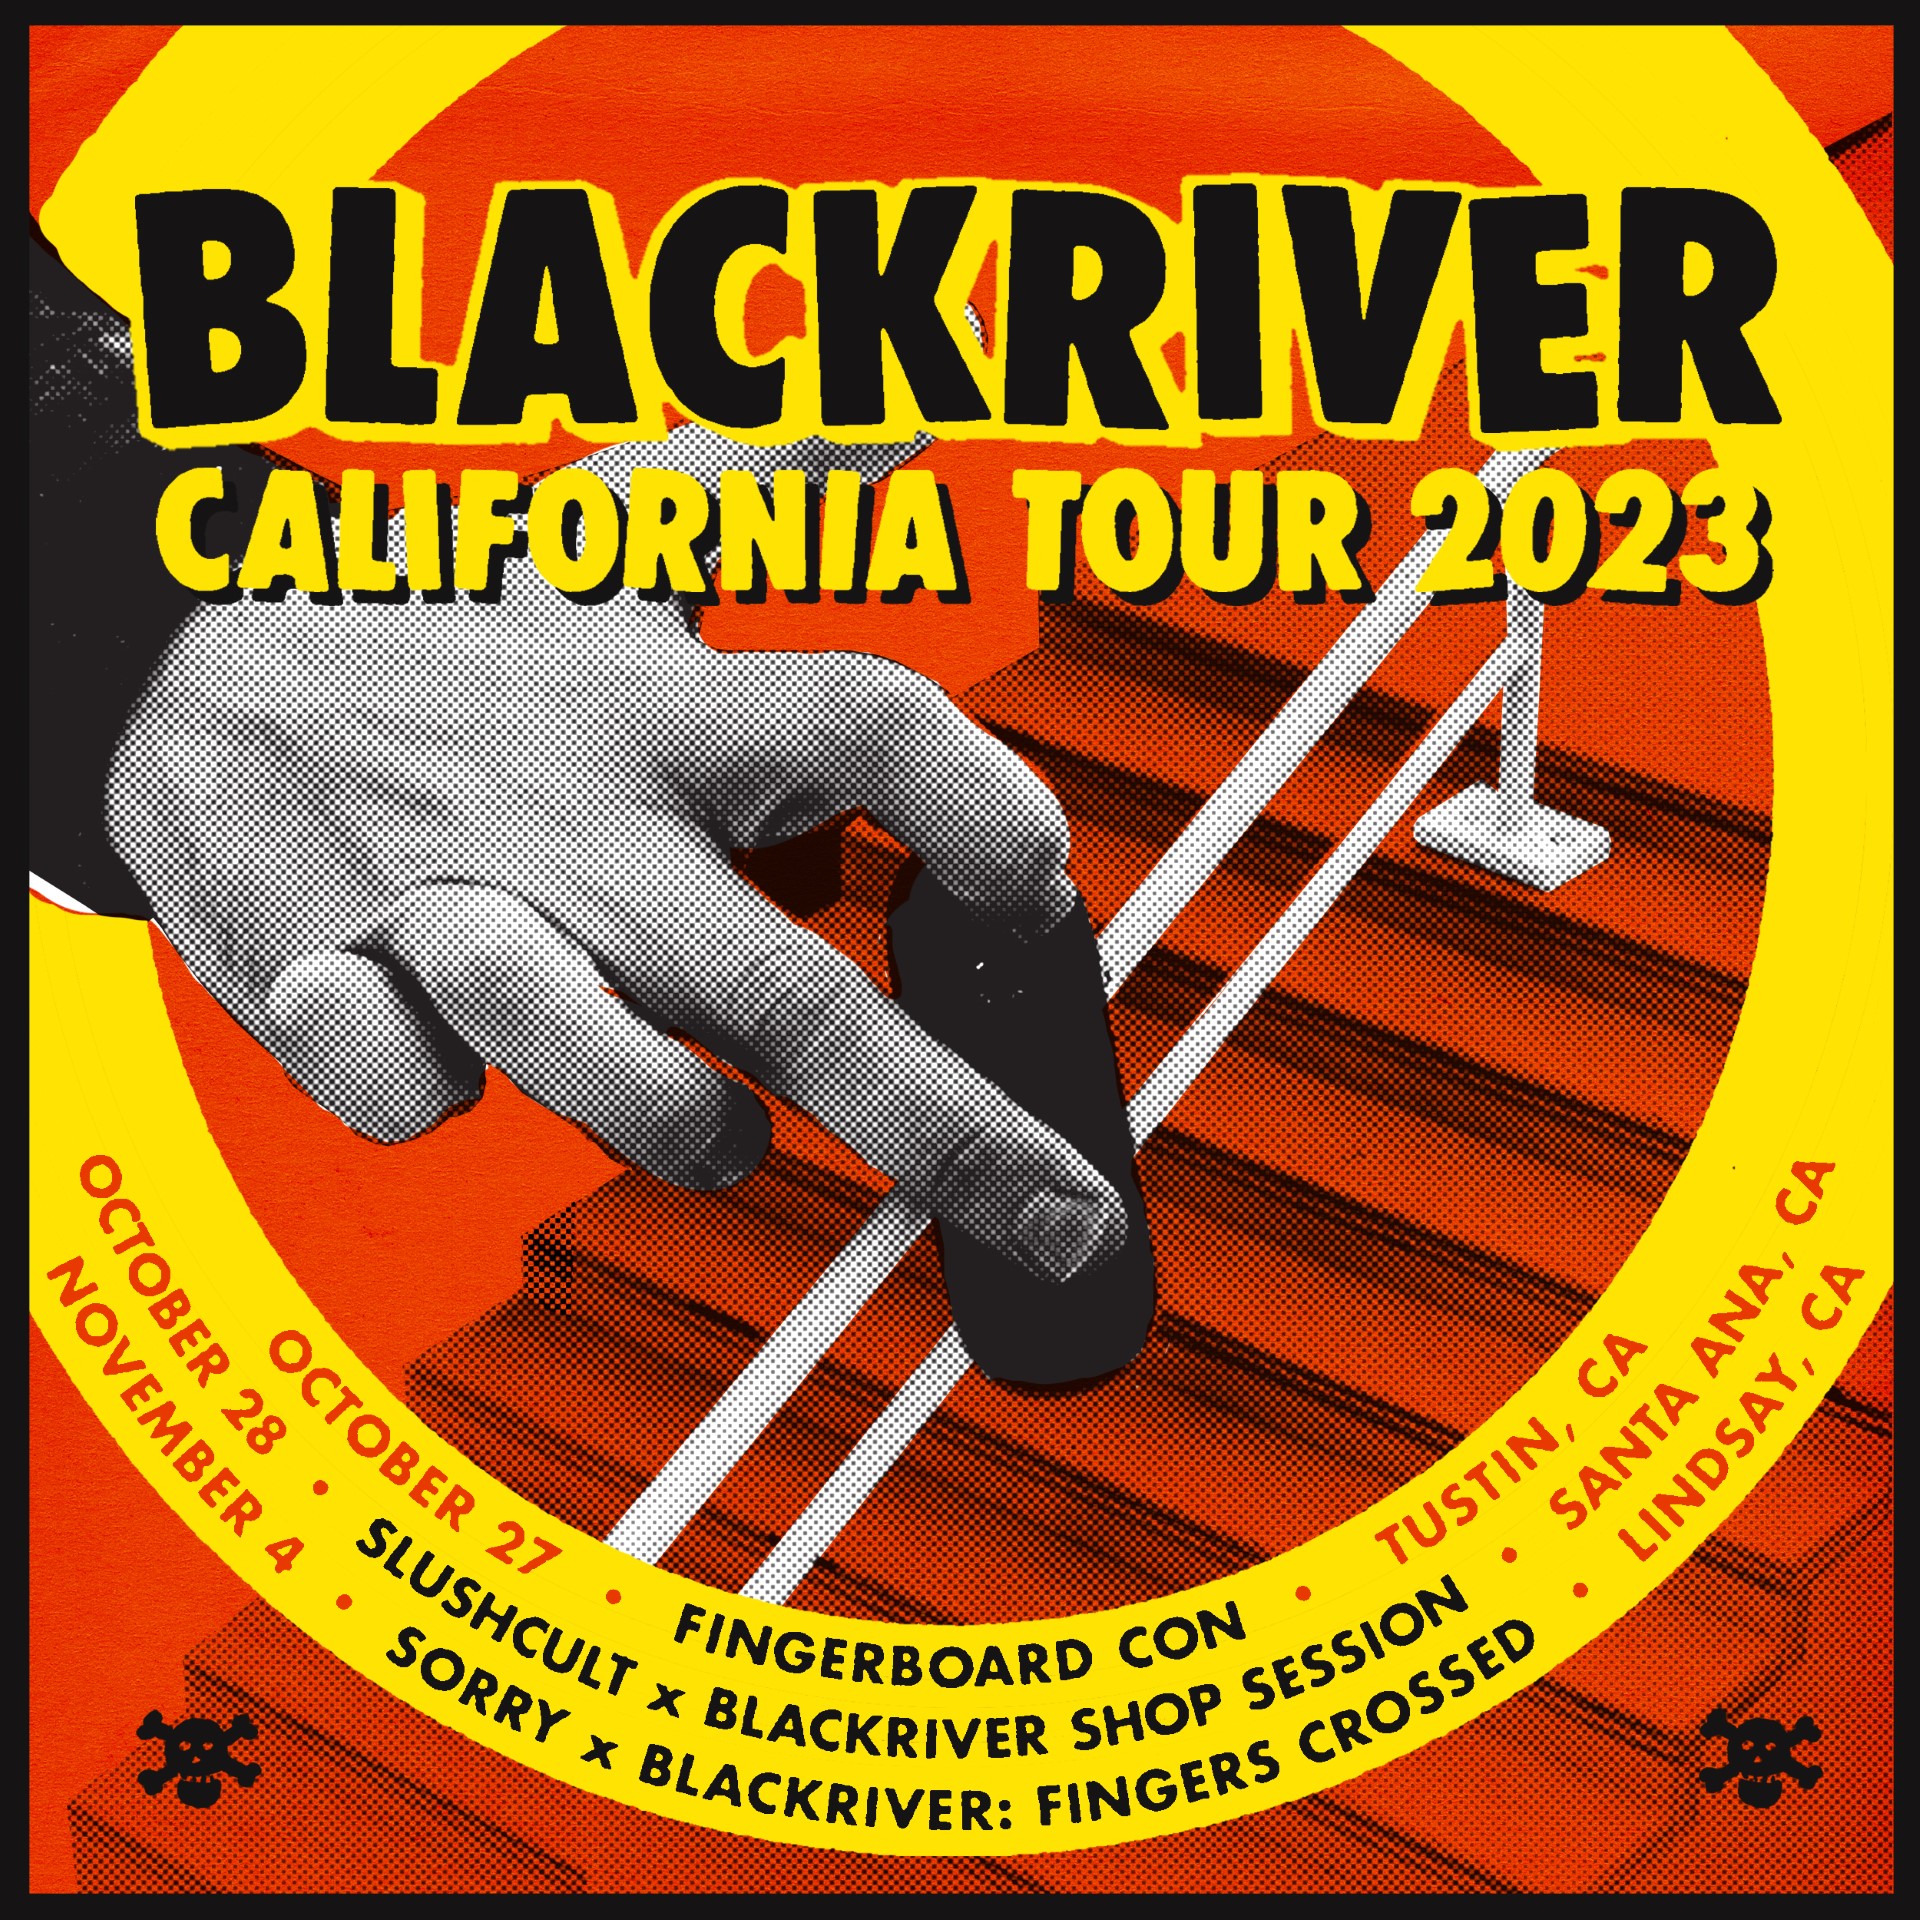 Blackriver California Tour 2023